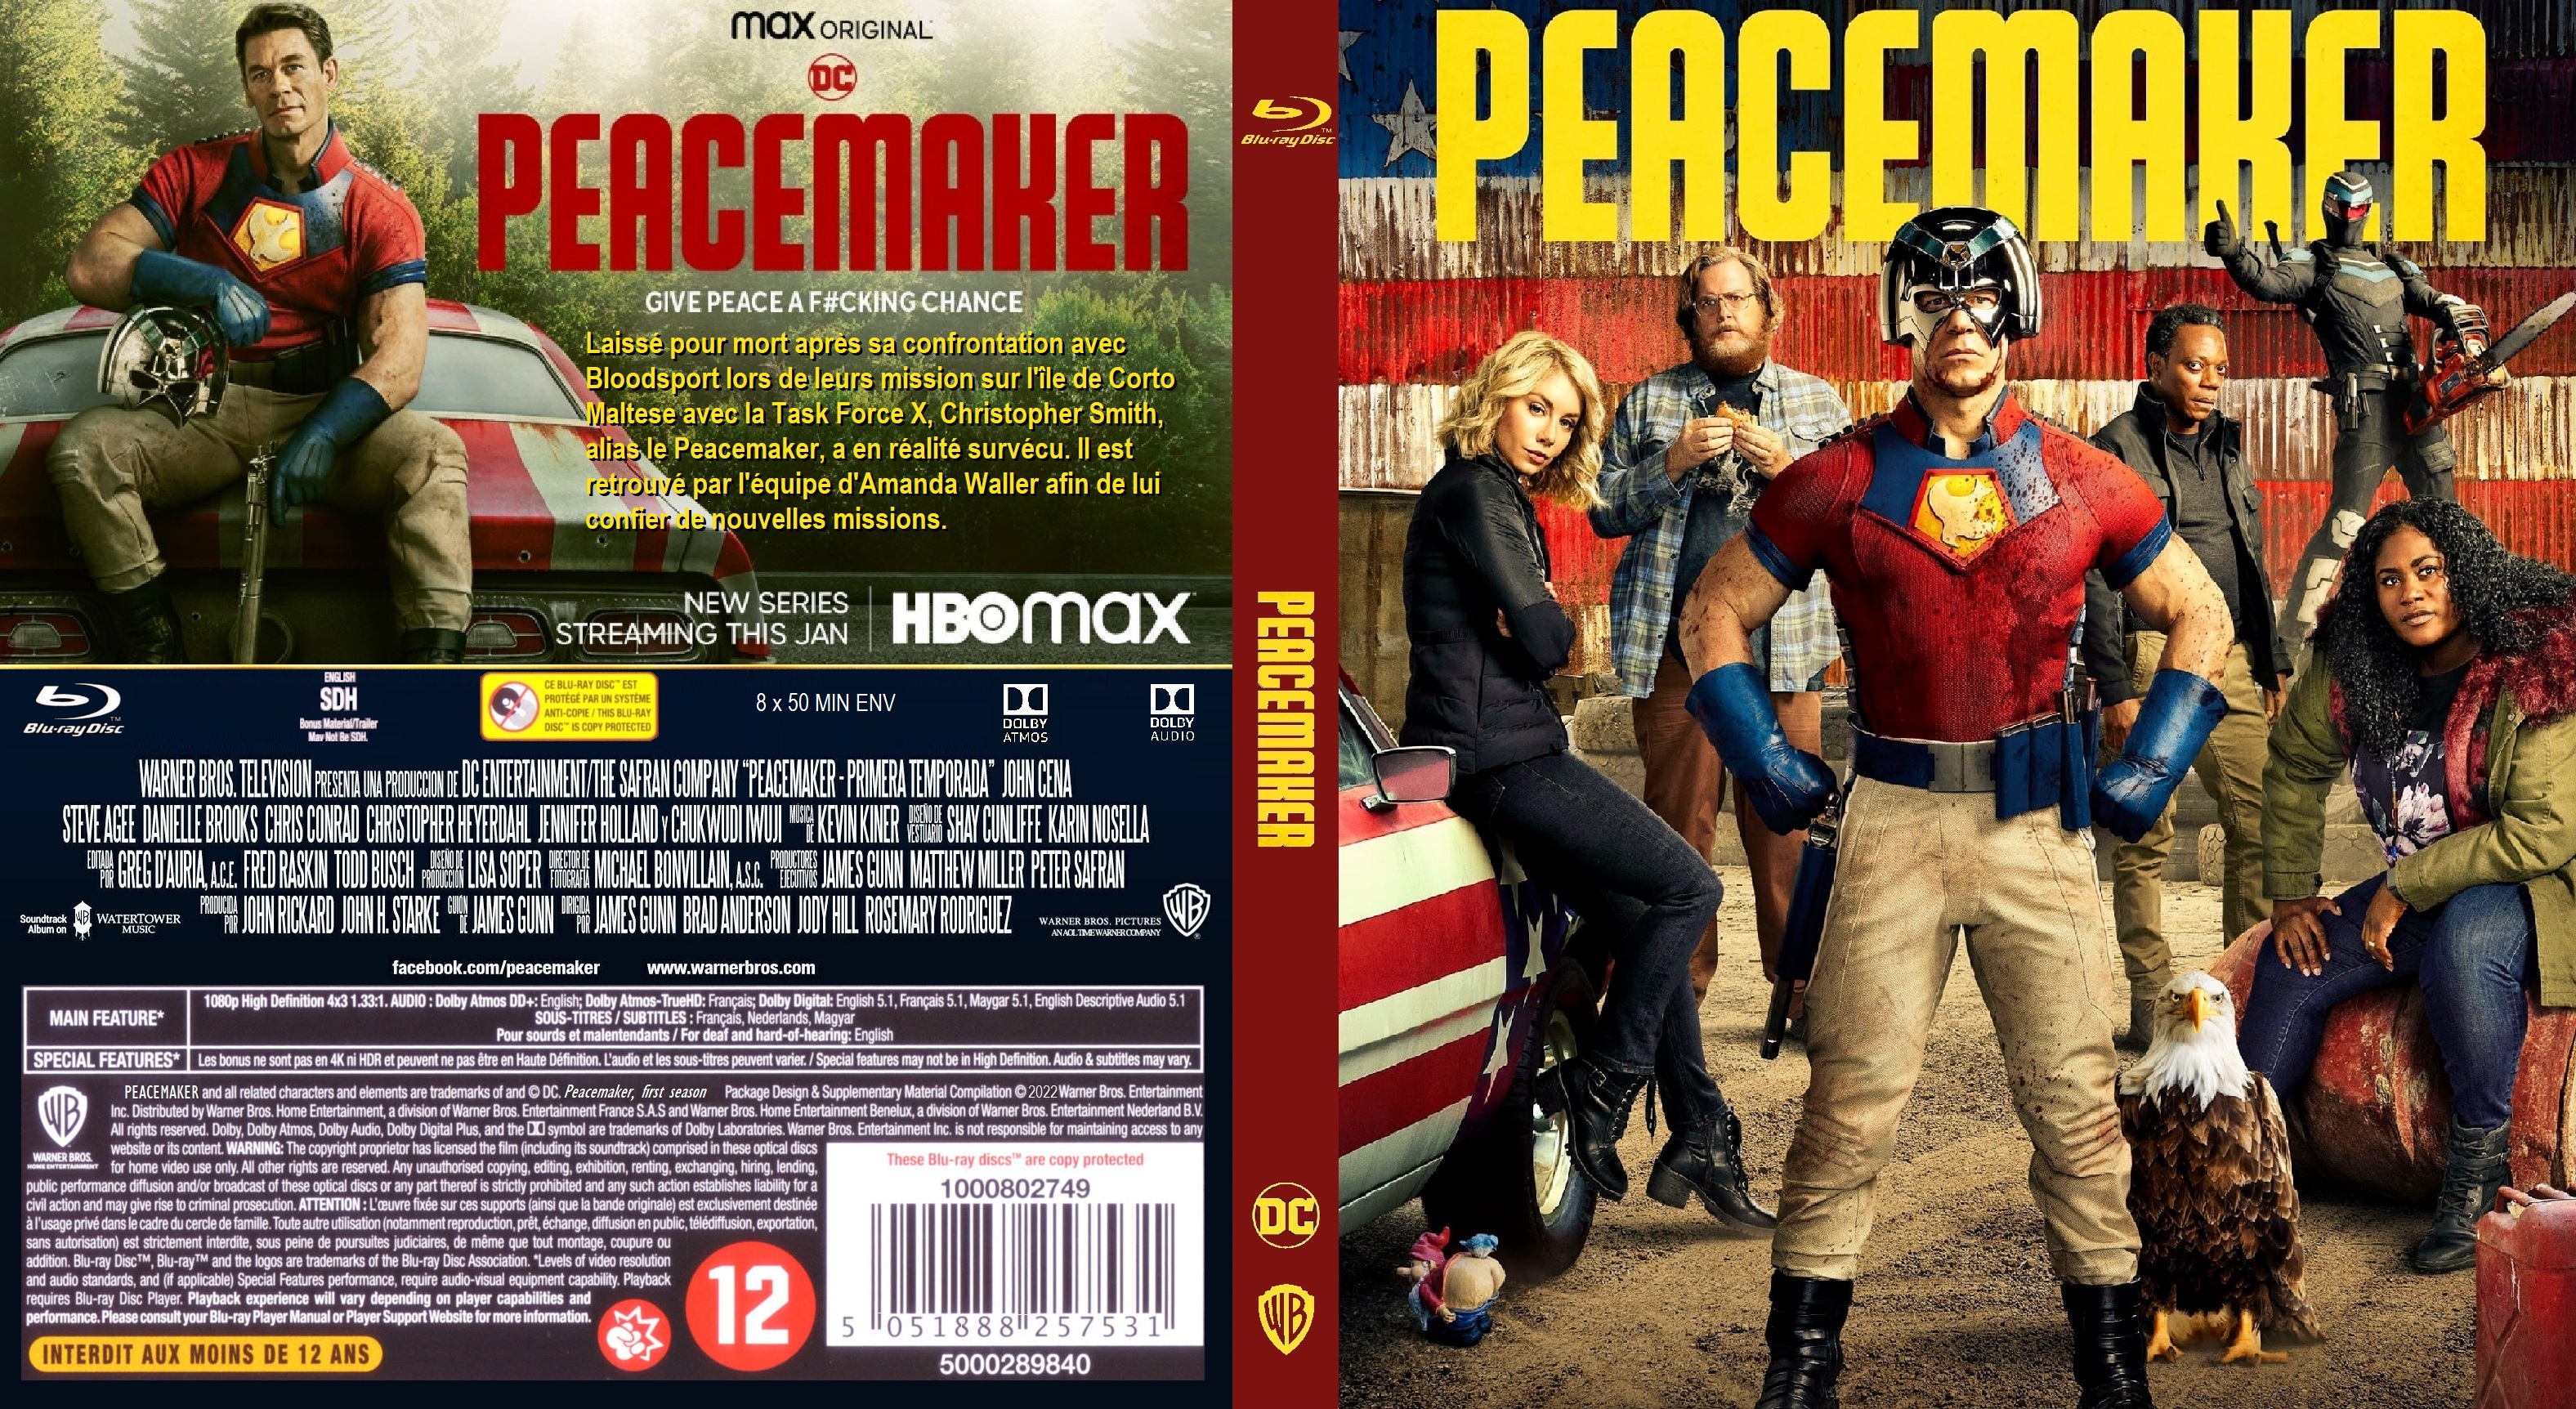 Jaquette DVD Peacemaker saison 1 BLU RAY custom